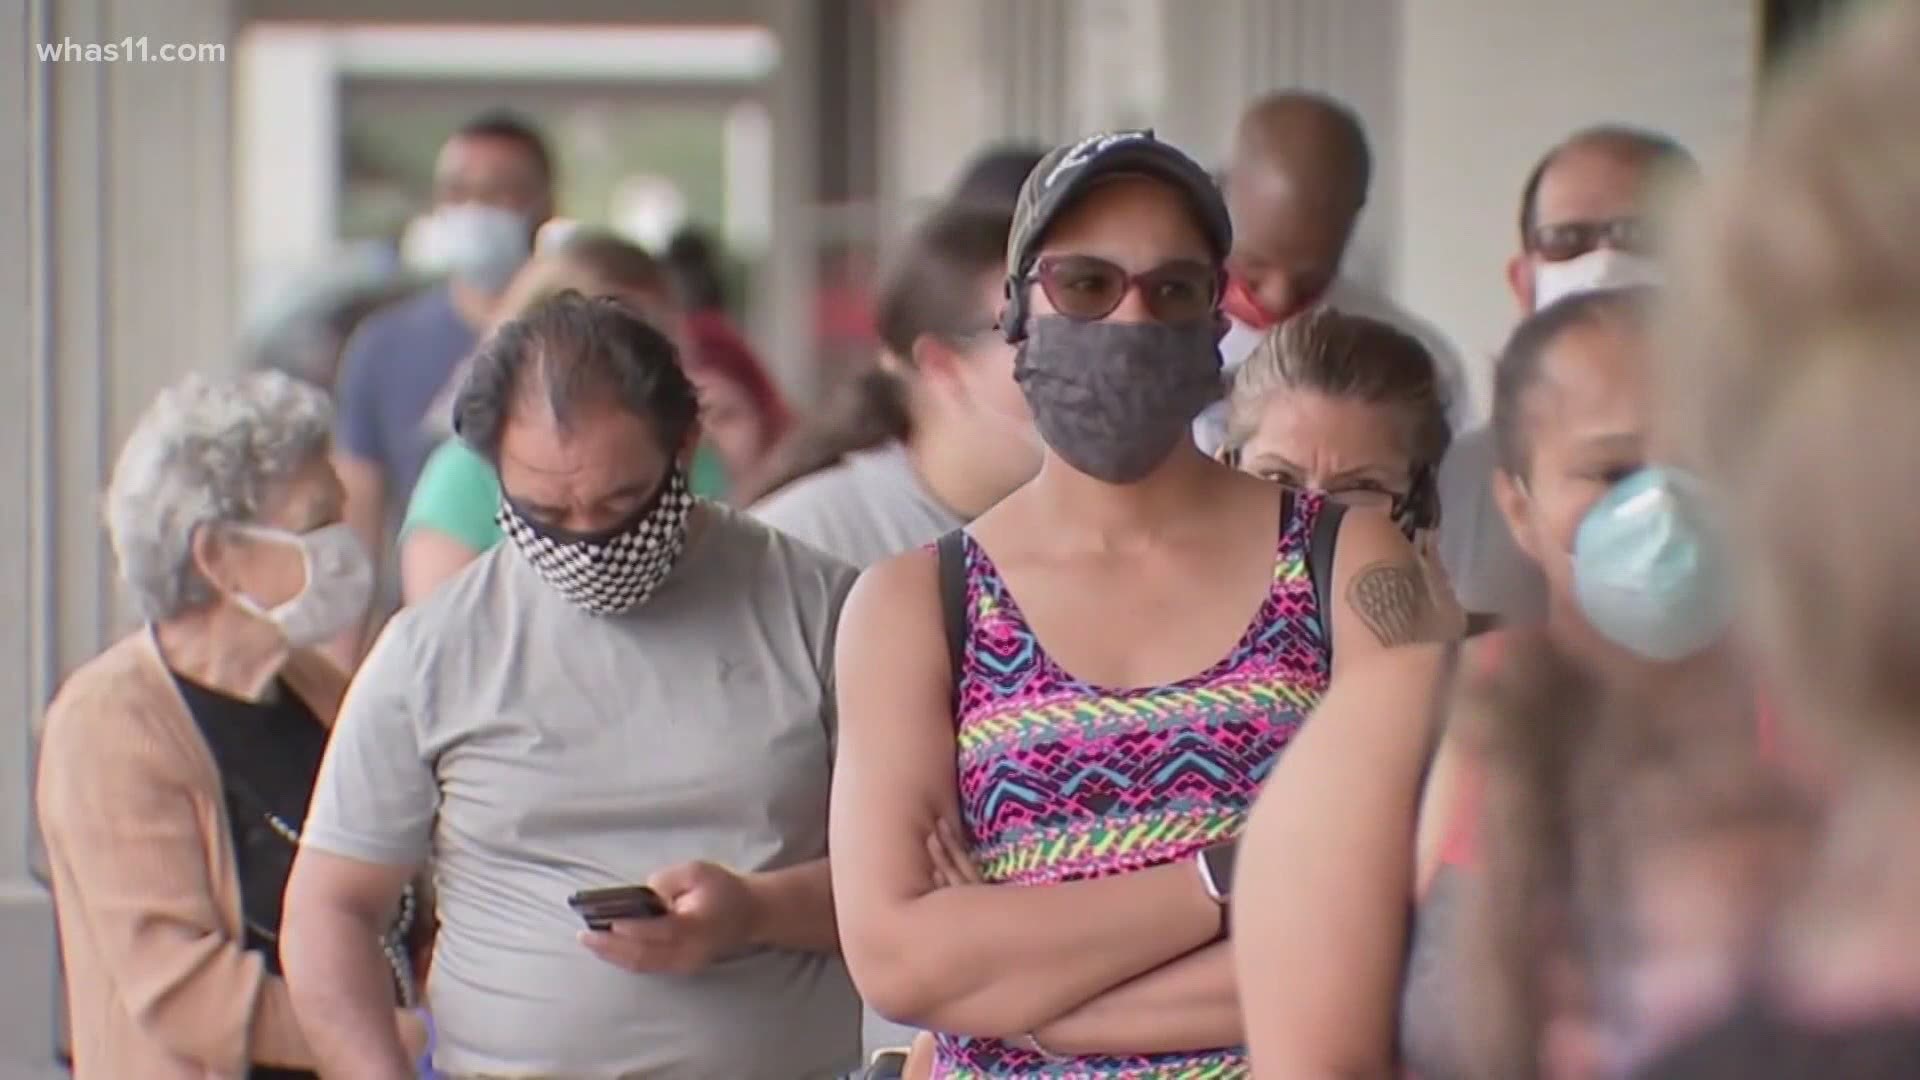 Indiana's mask mandate goes into effect on Monday